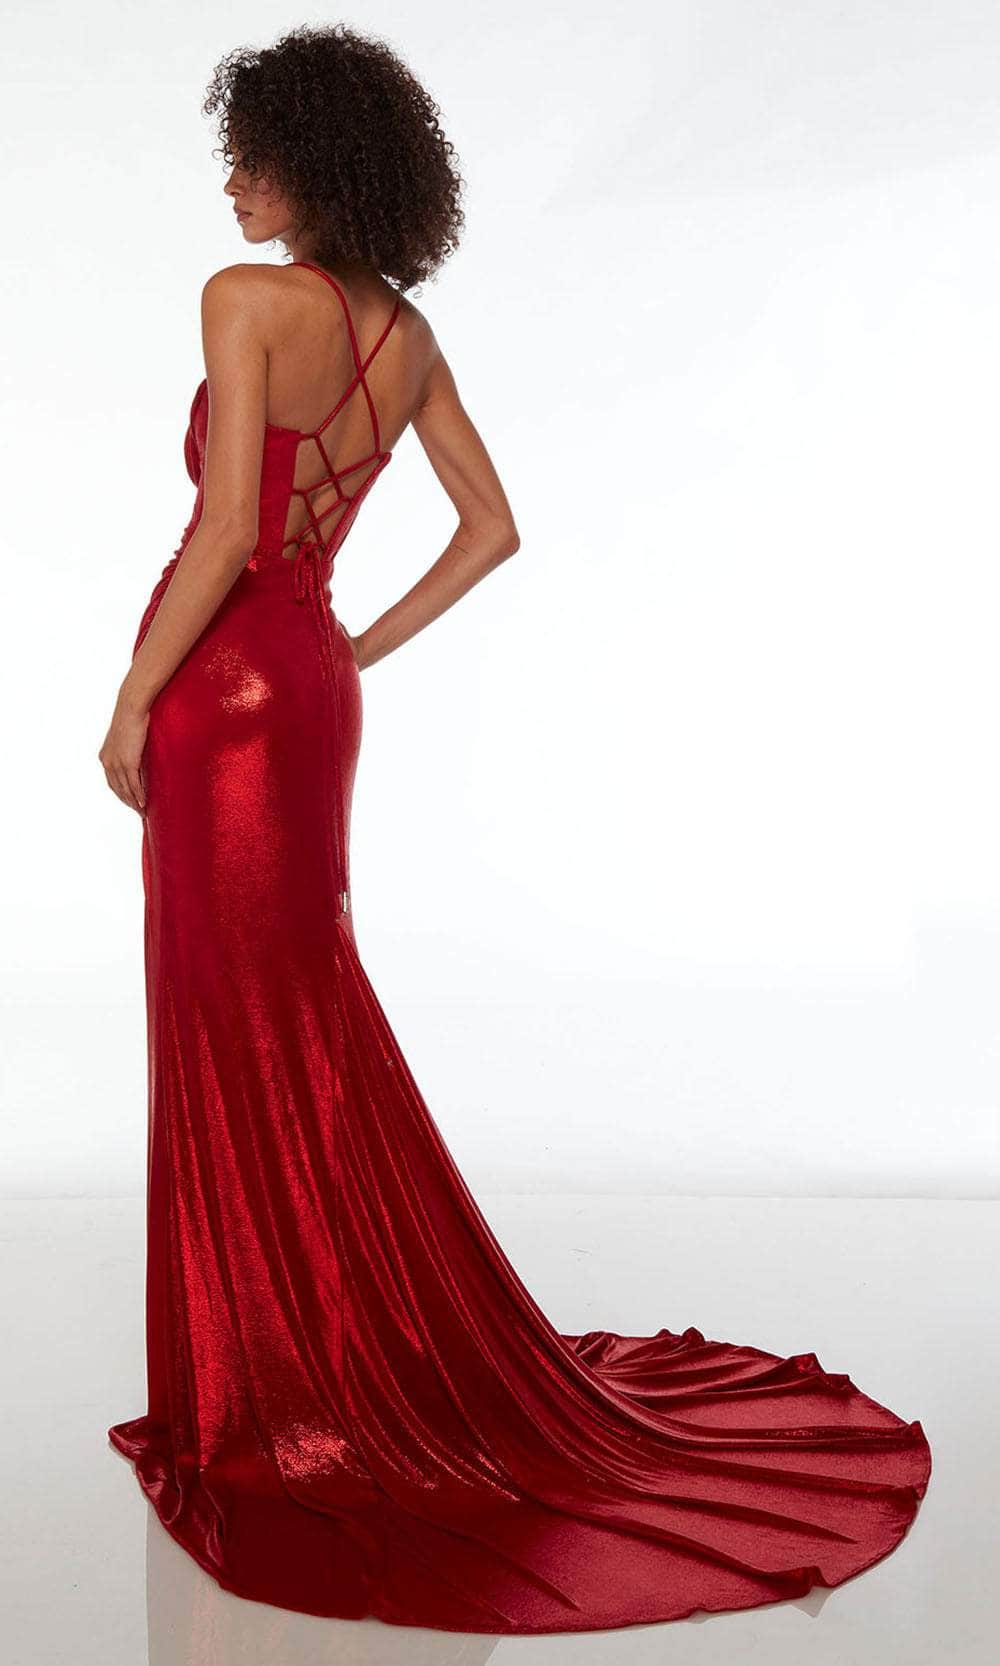 Alyce Paris 61490 - Metallic Corset Prom Dress Special Occasion Dresses